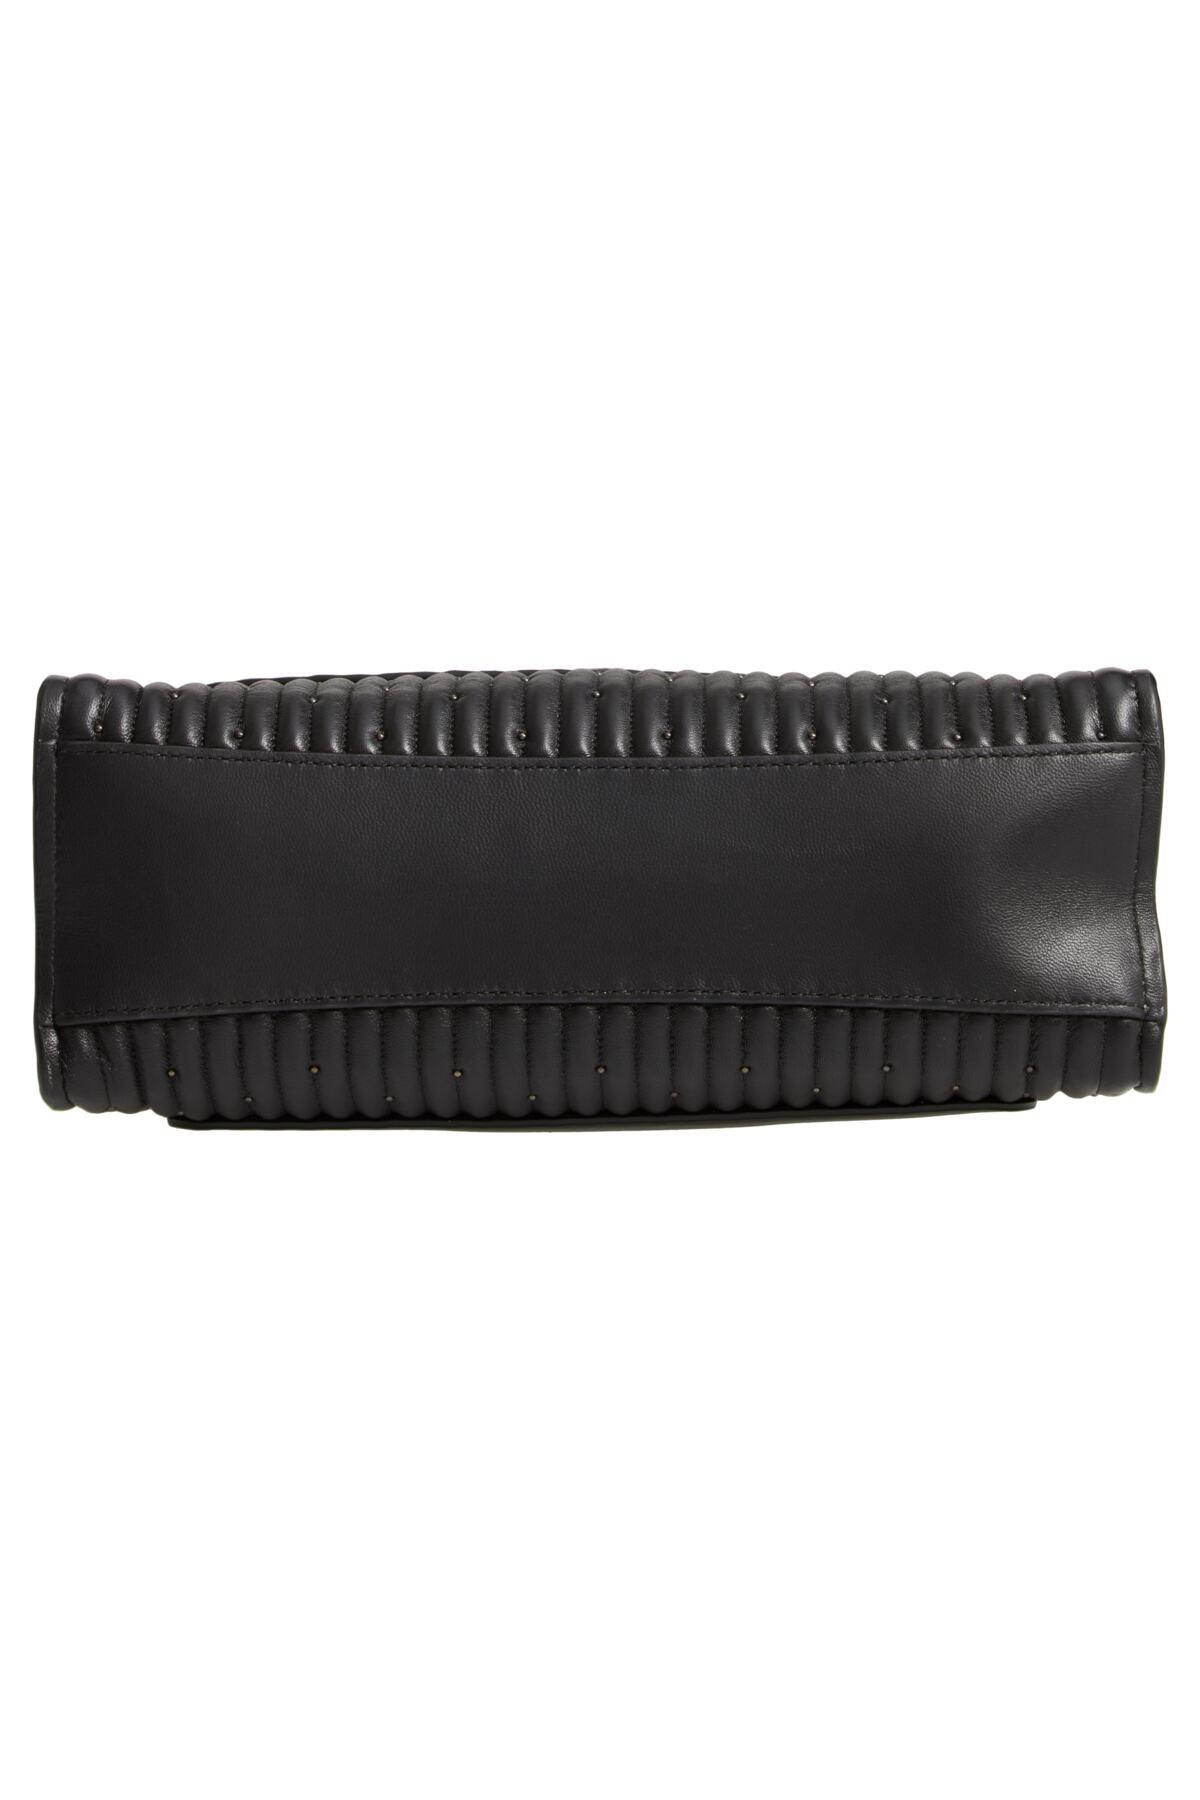 COACH Parker Quilted Leather Shoulder Bag in Black - Lyst